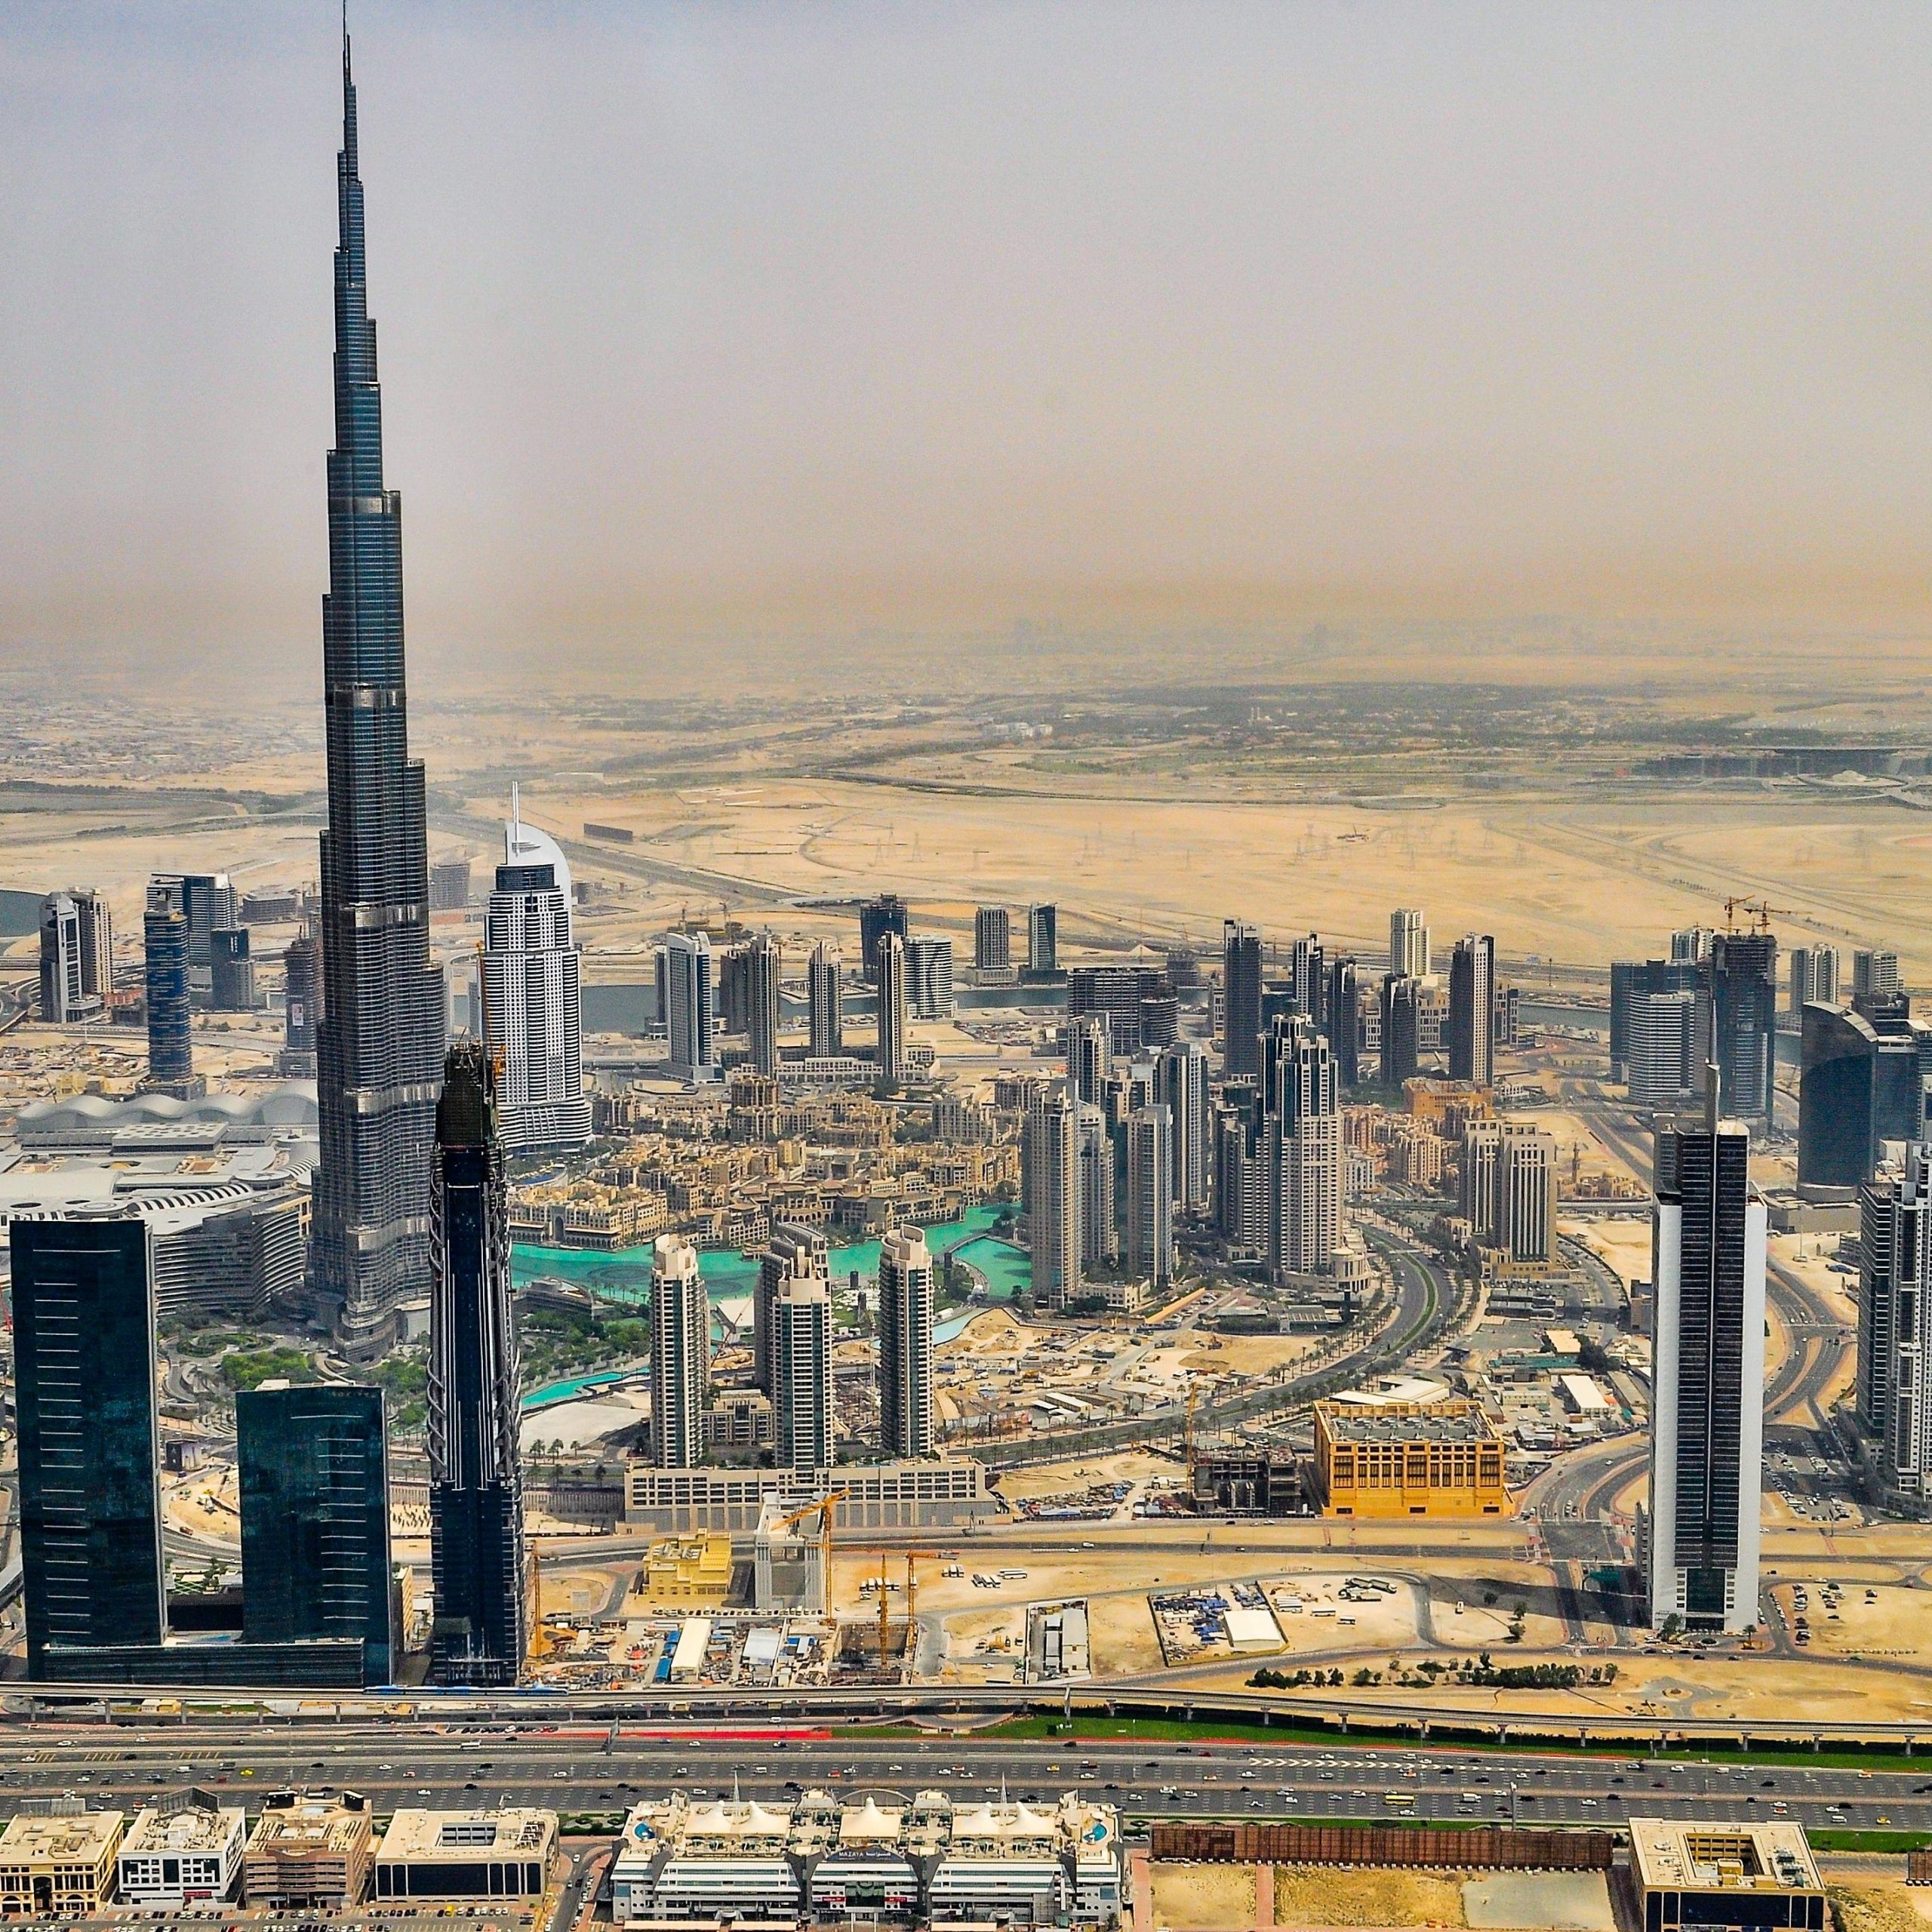 Burj khalifa at the top 124 to 125th floor